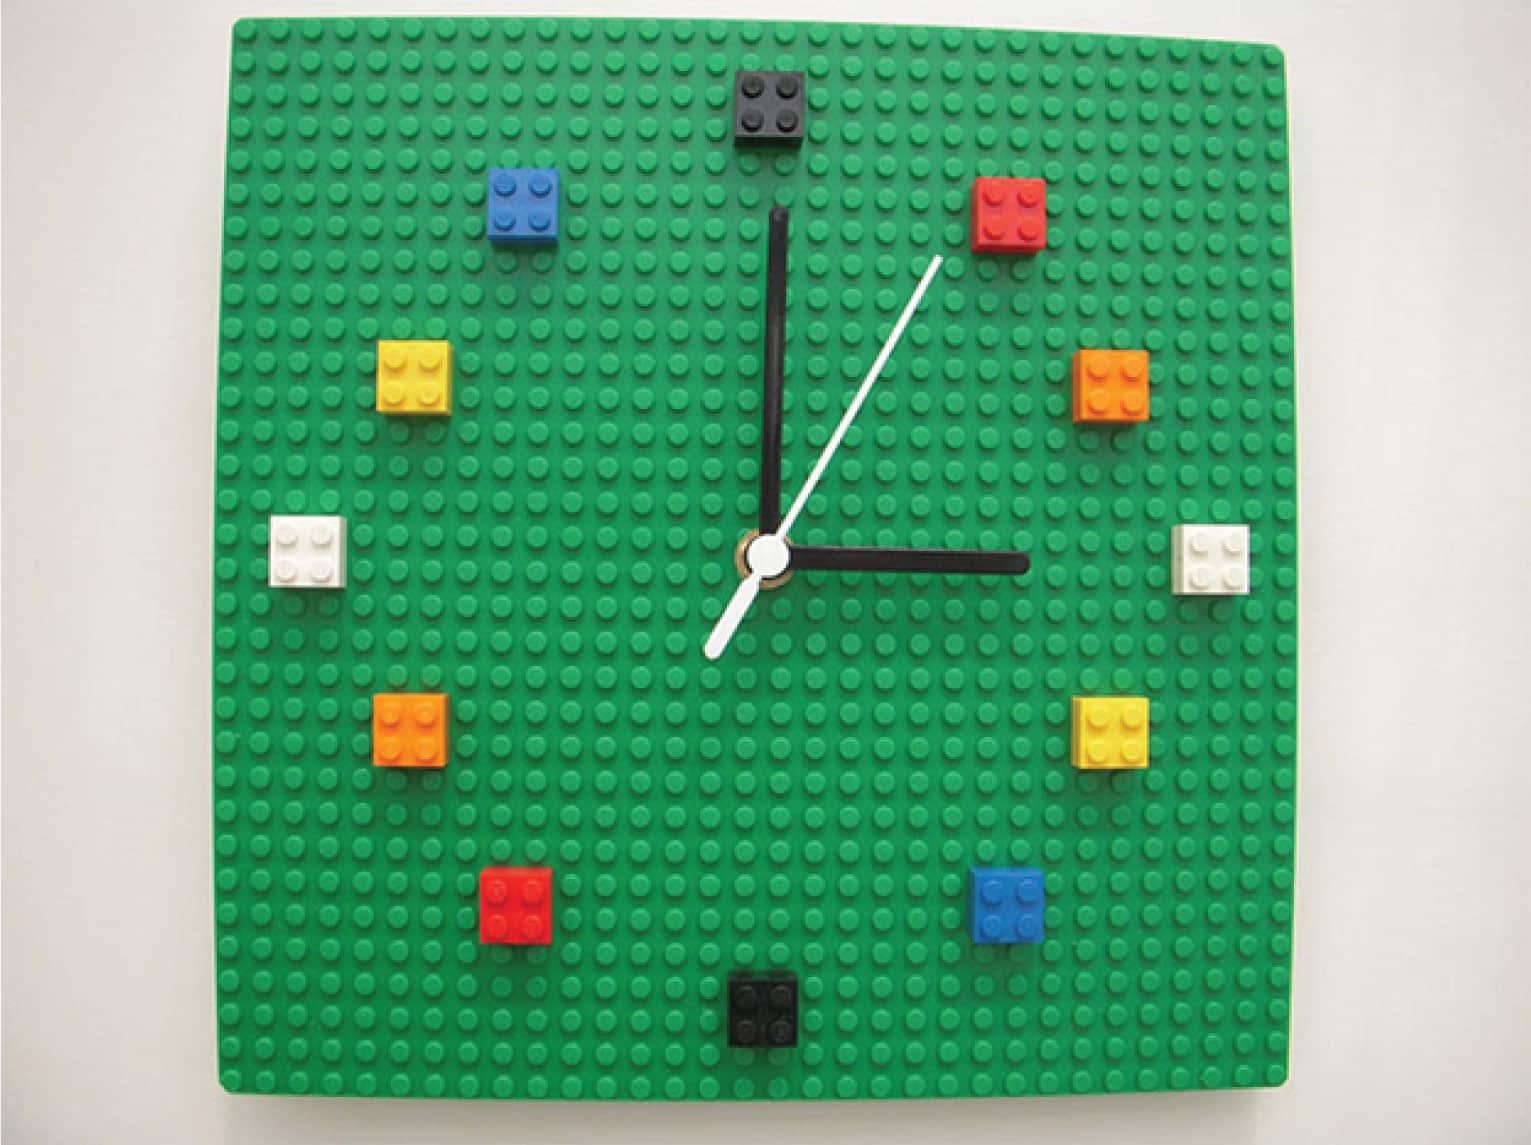 Lego Dapat Dijadikan Benda Yang Fungsional